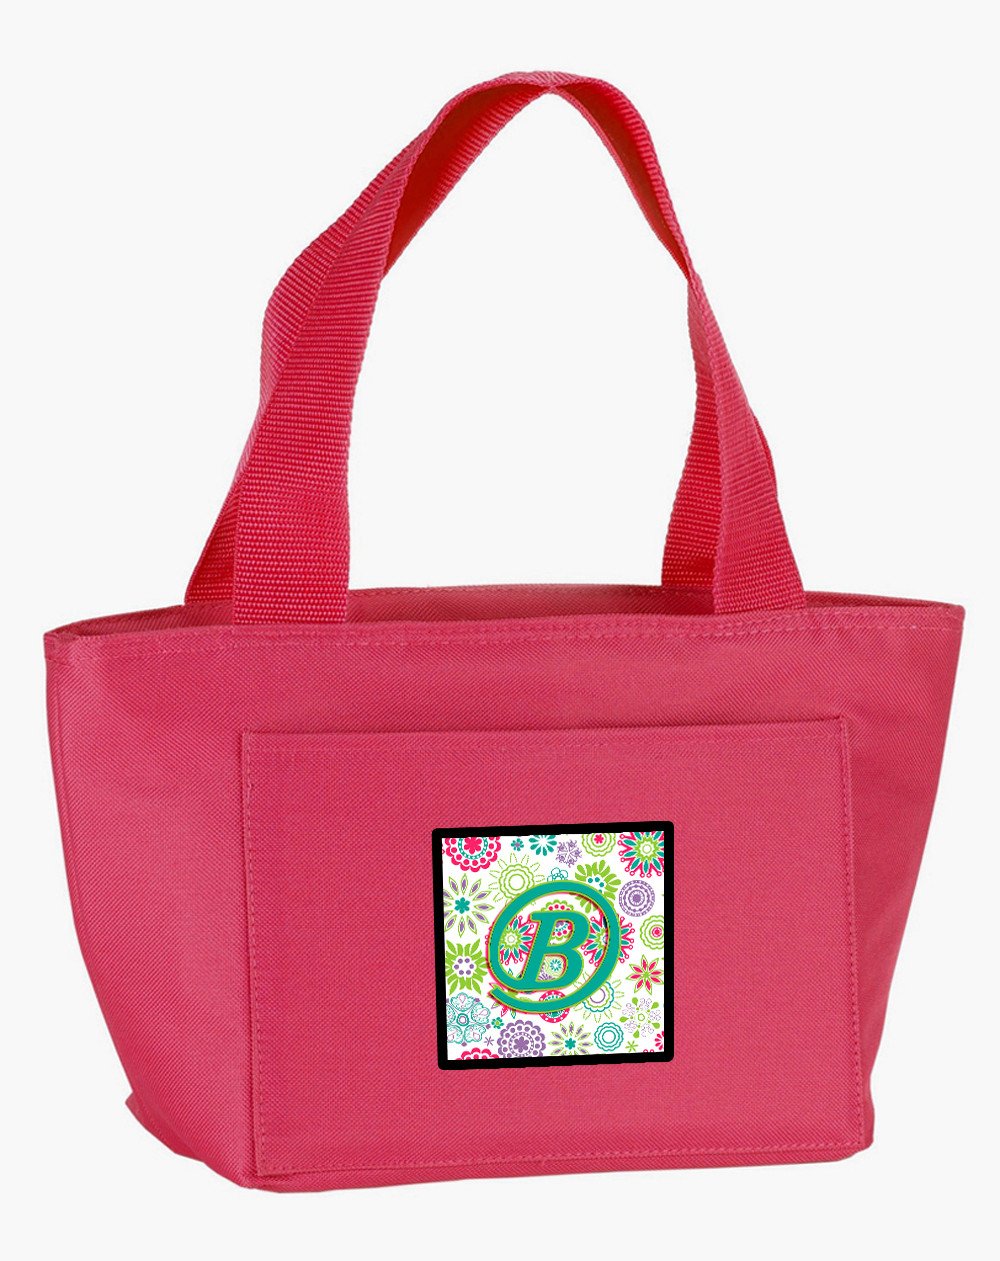 Letter B Flowers Pink Teal Green Initial Lunch Bag CJ2011-BPK-8808 by Caroline's Treasures